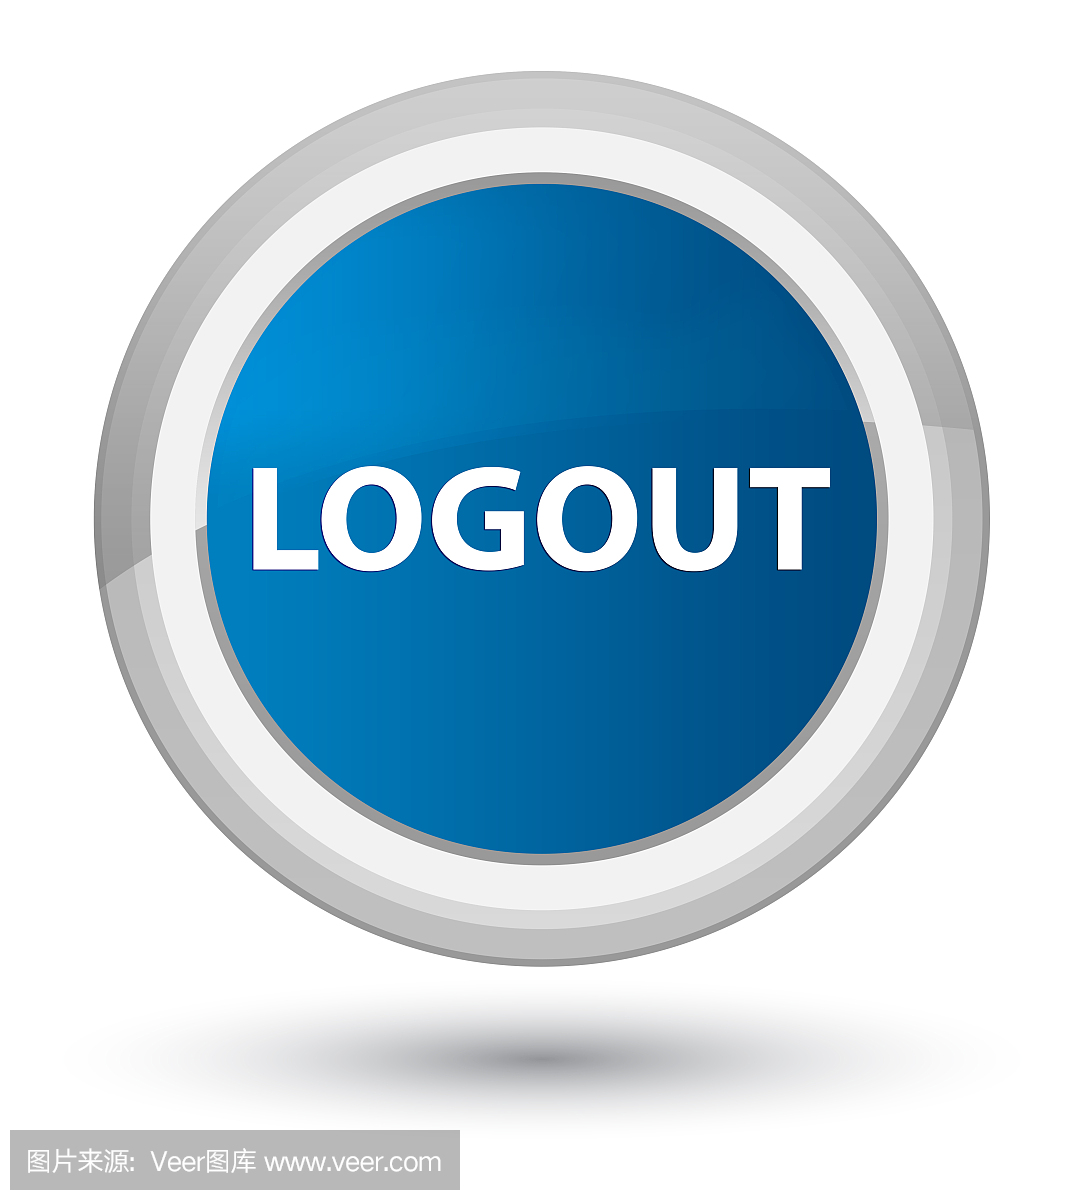 Logout prime blue round button